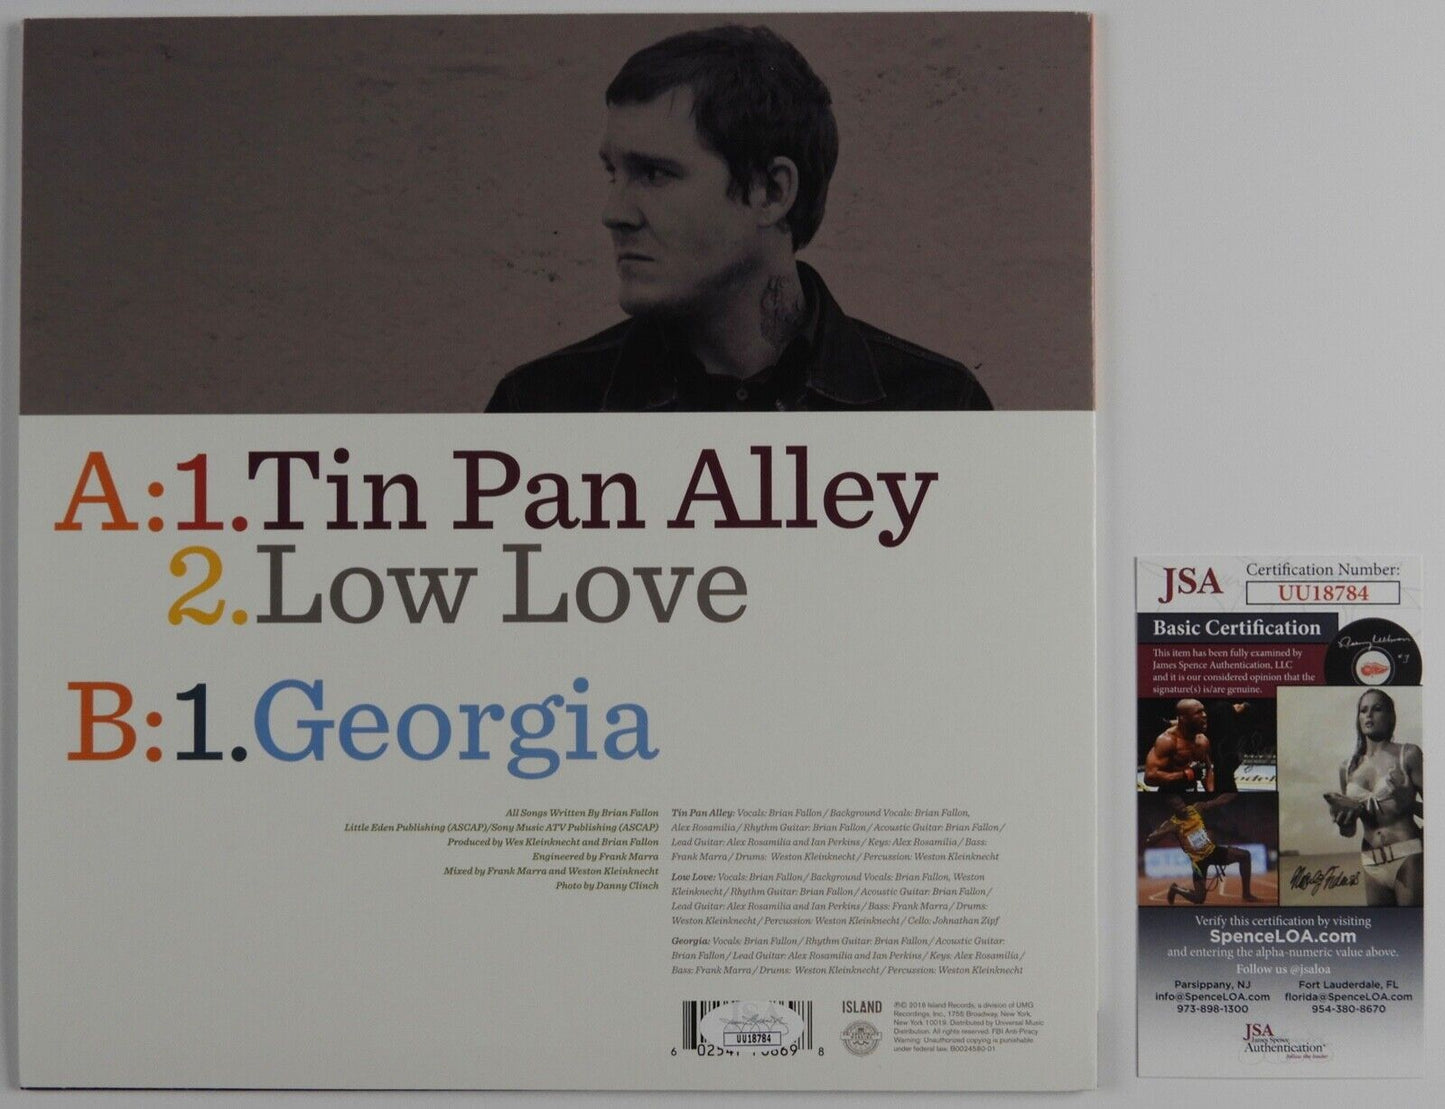 Brian Fallon JSA Autograph Signed Record Album Vinyl Georgia